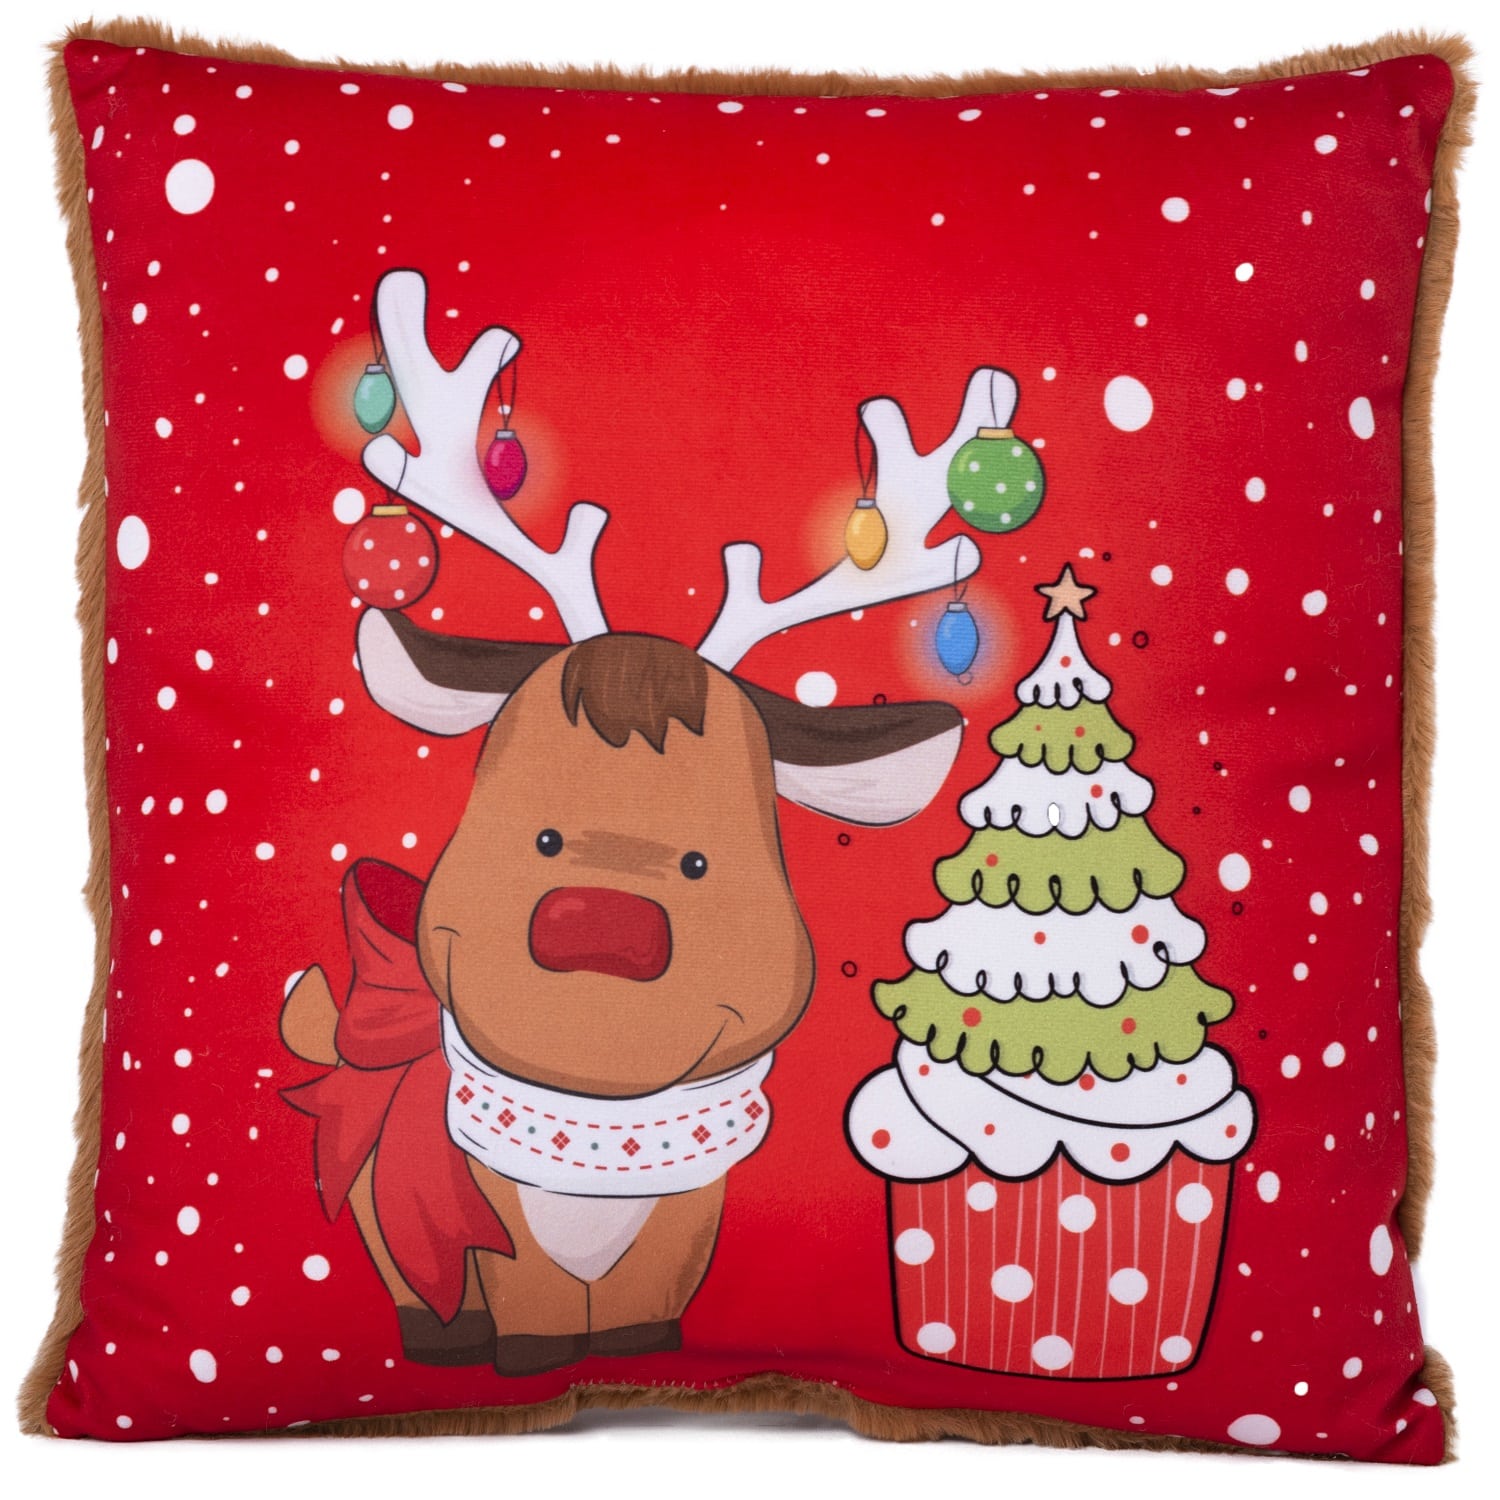 Christmas pillow with deer